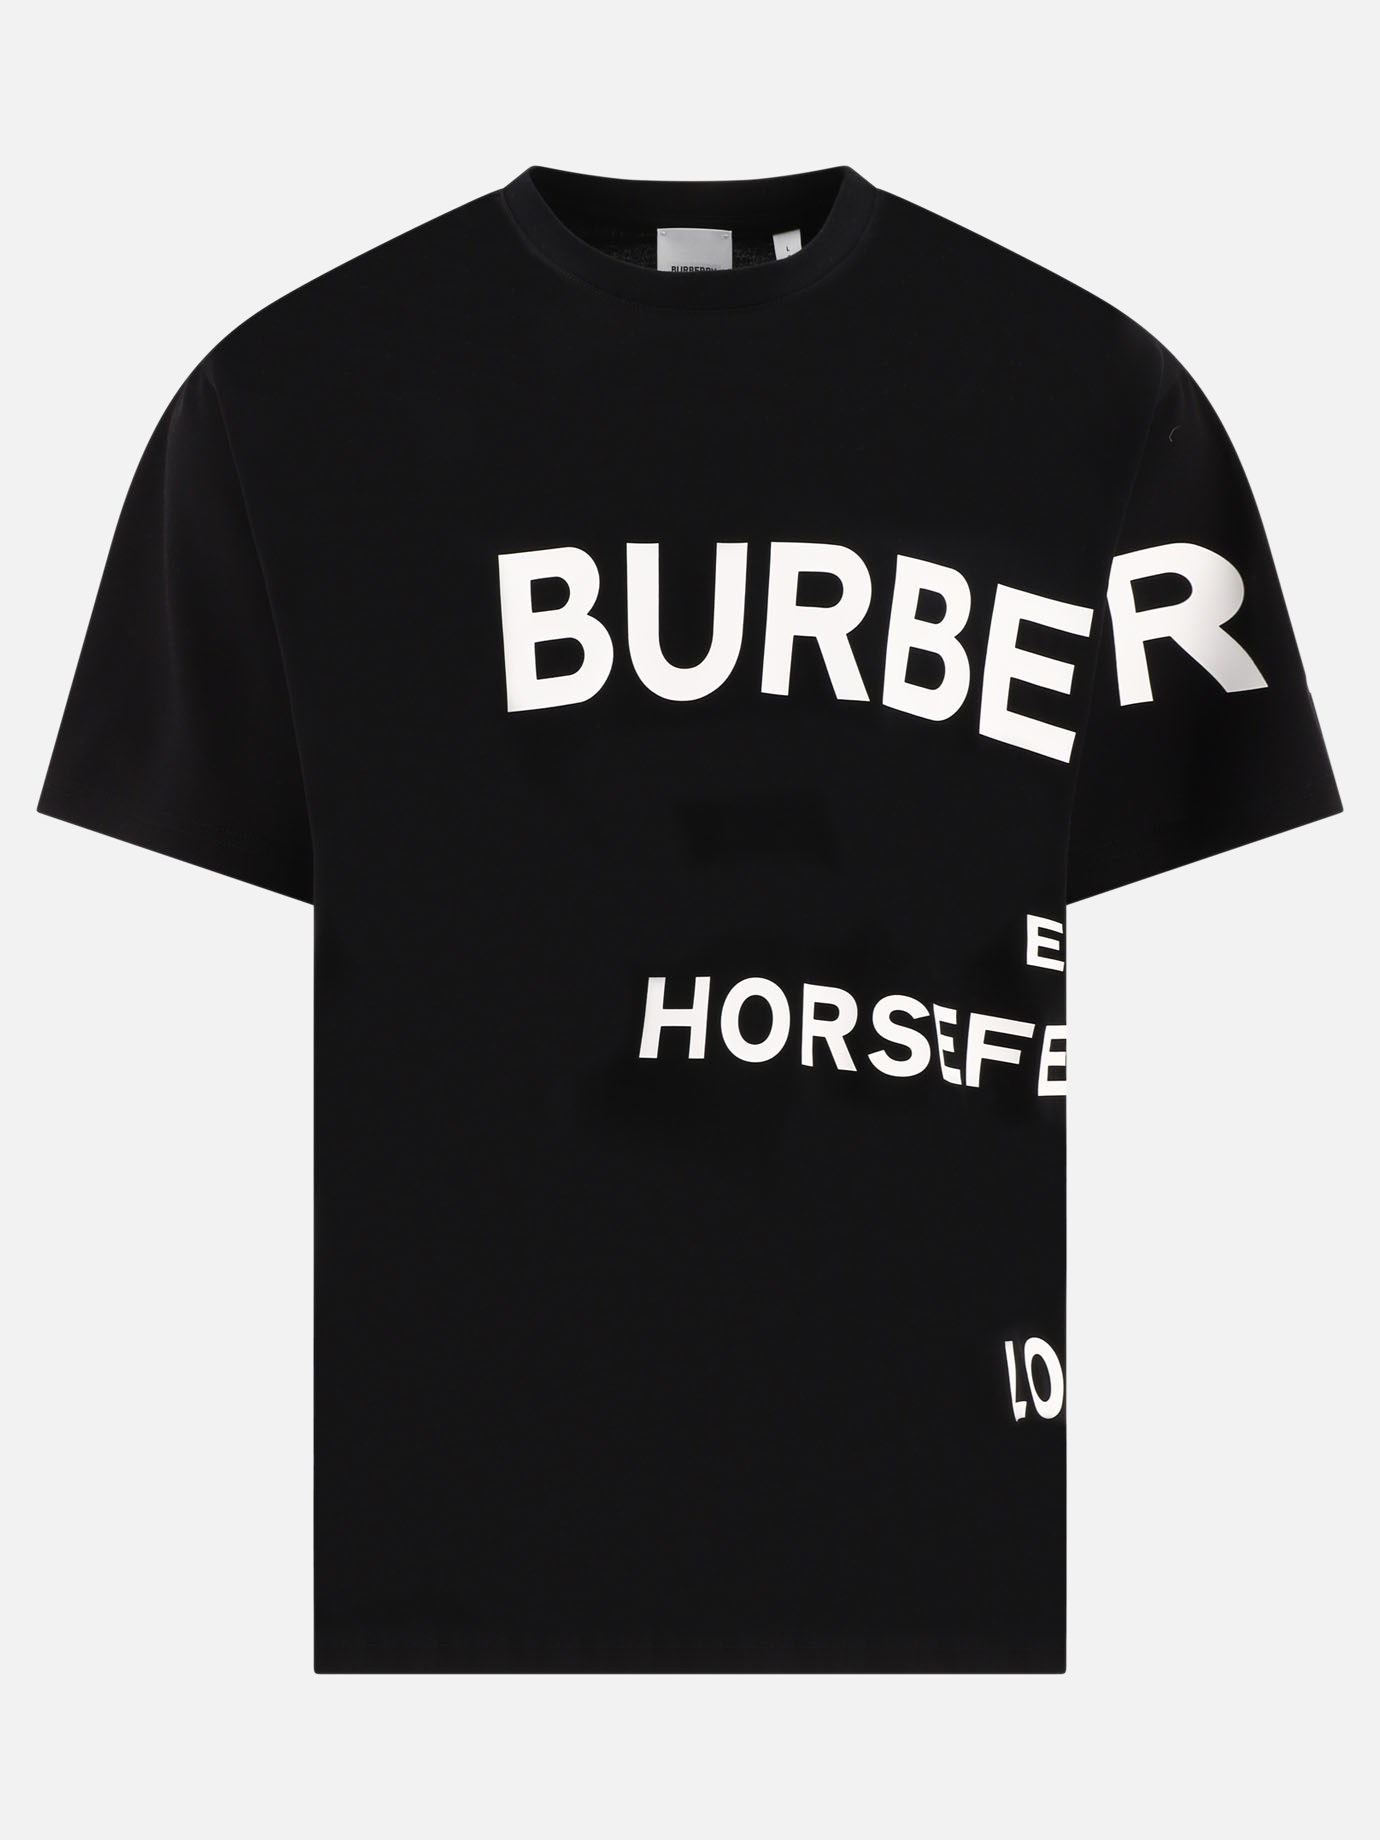  Harlford t-shirtby Burberry - 2